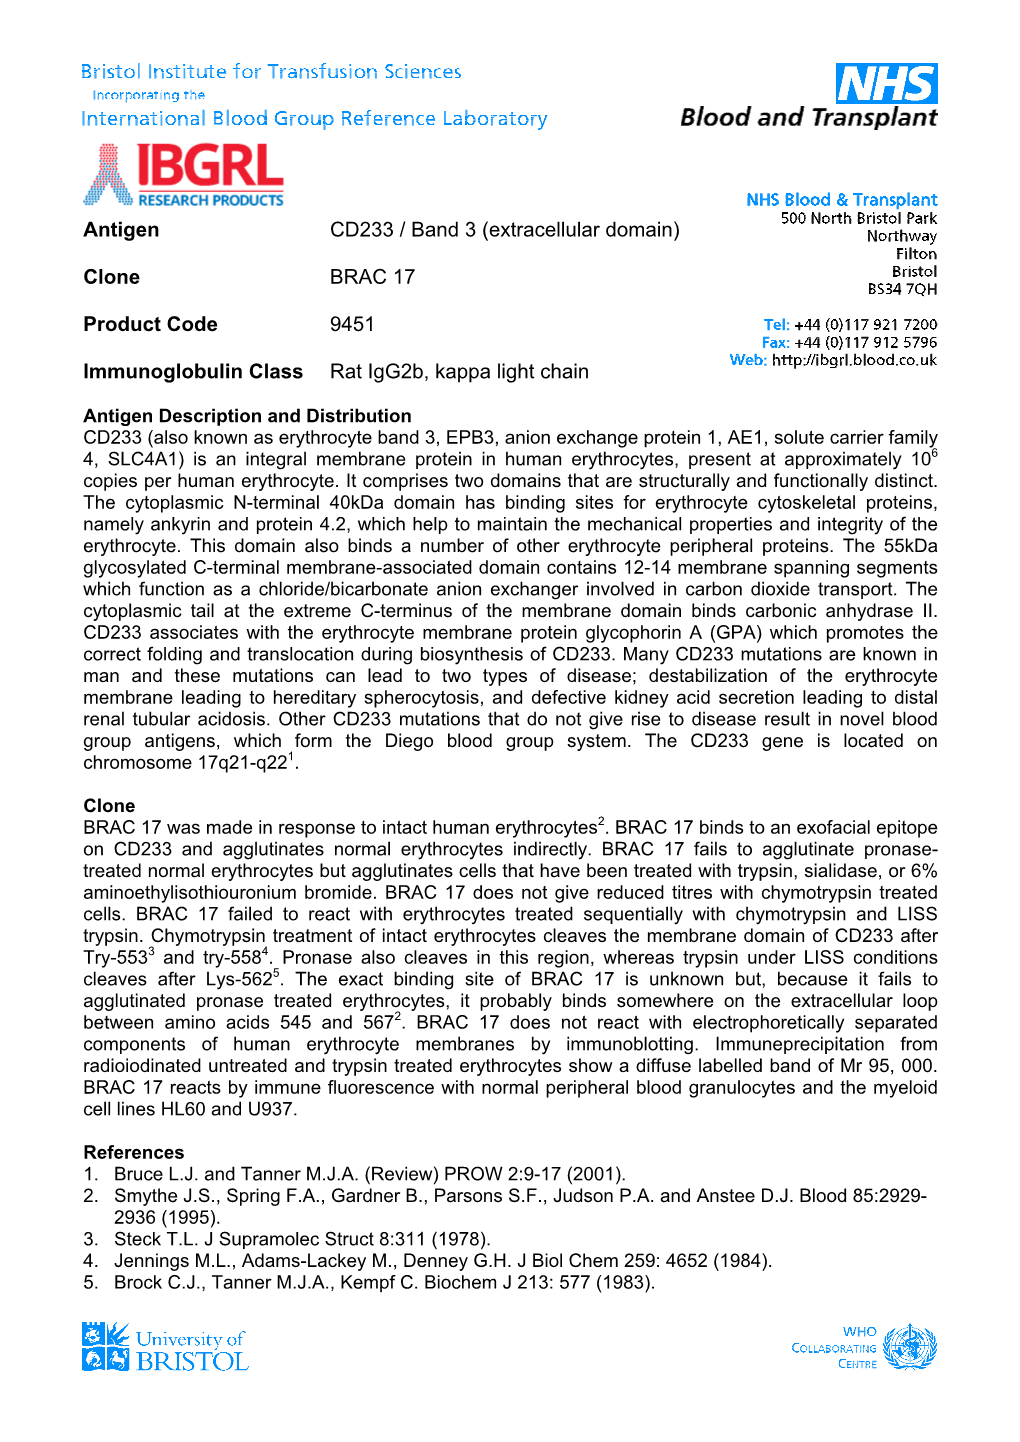 Antigen CD233 / Band 3 (Extracellular Domain) Clone BRAC 17